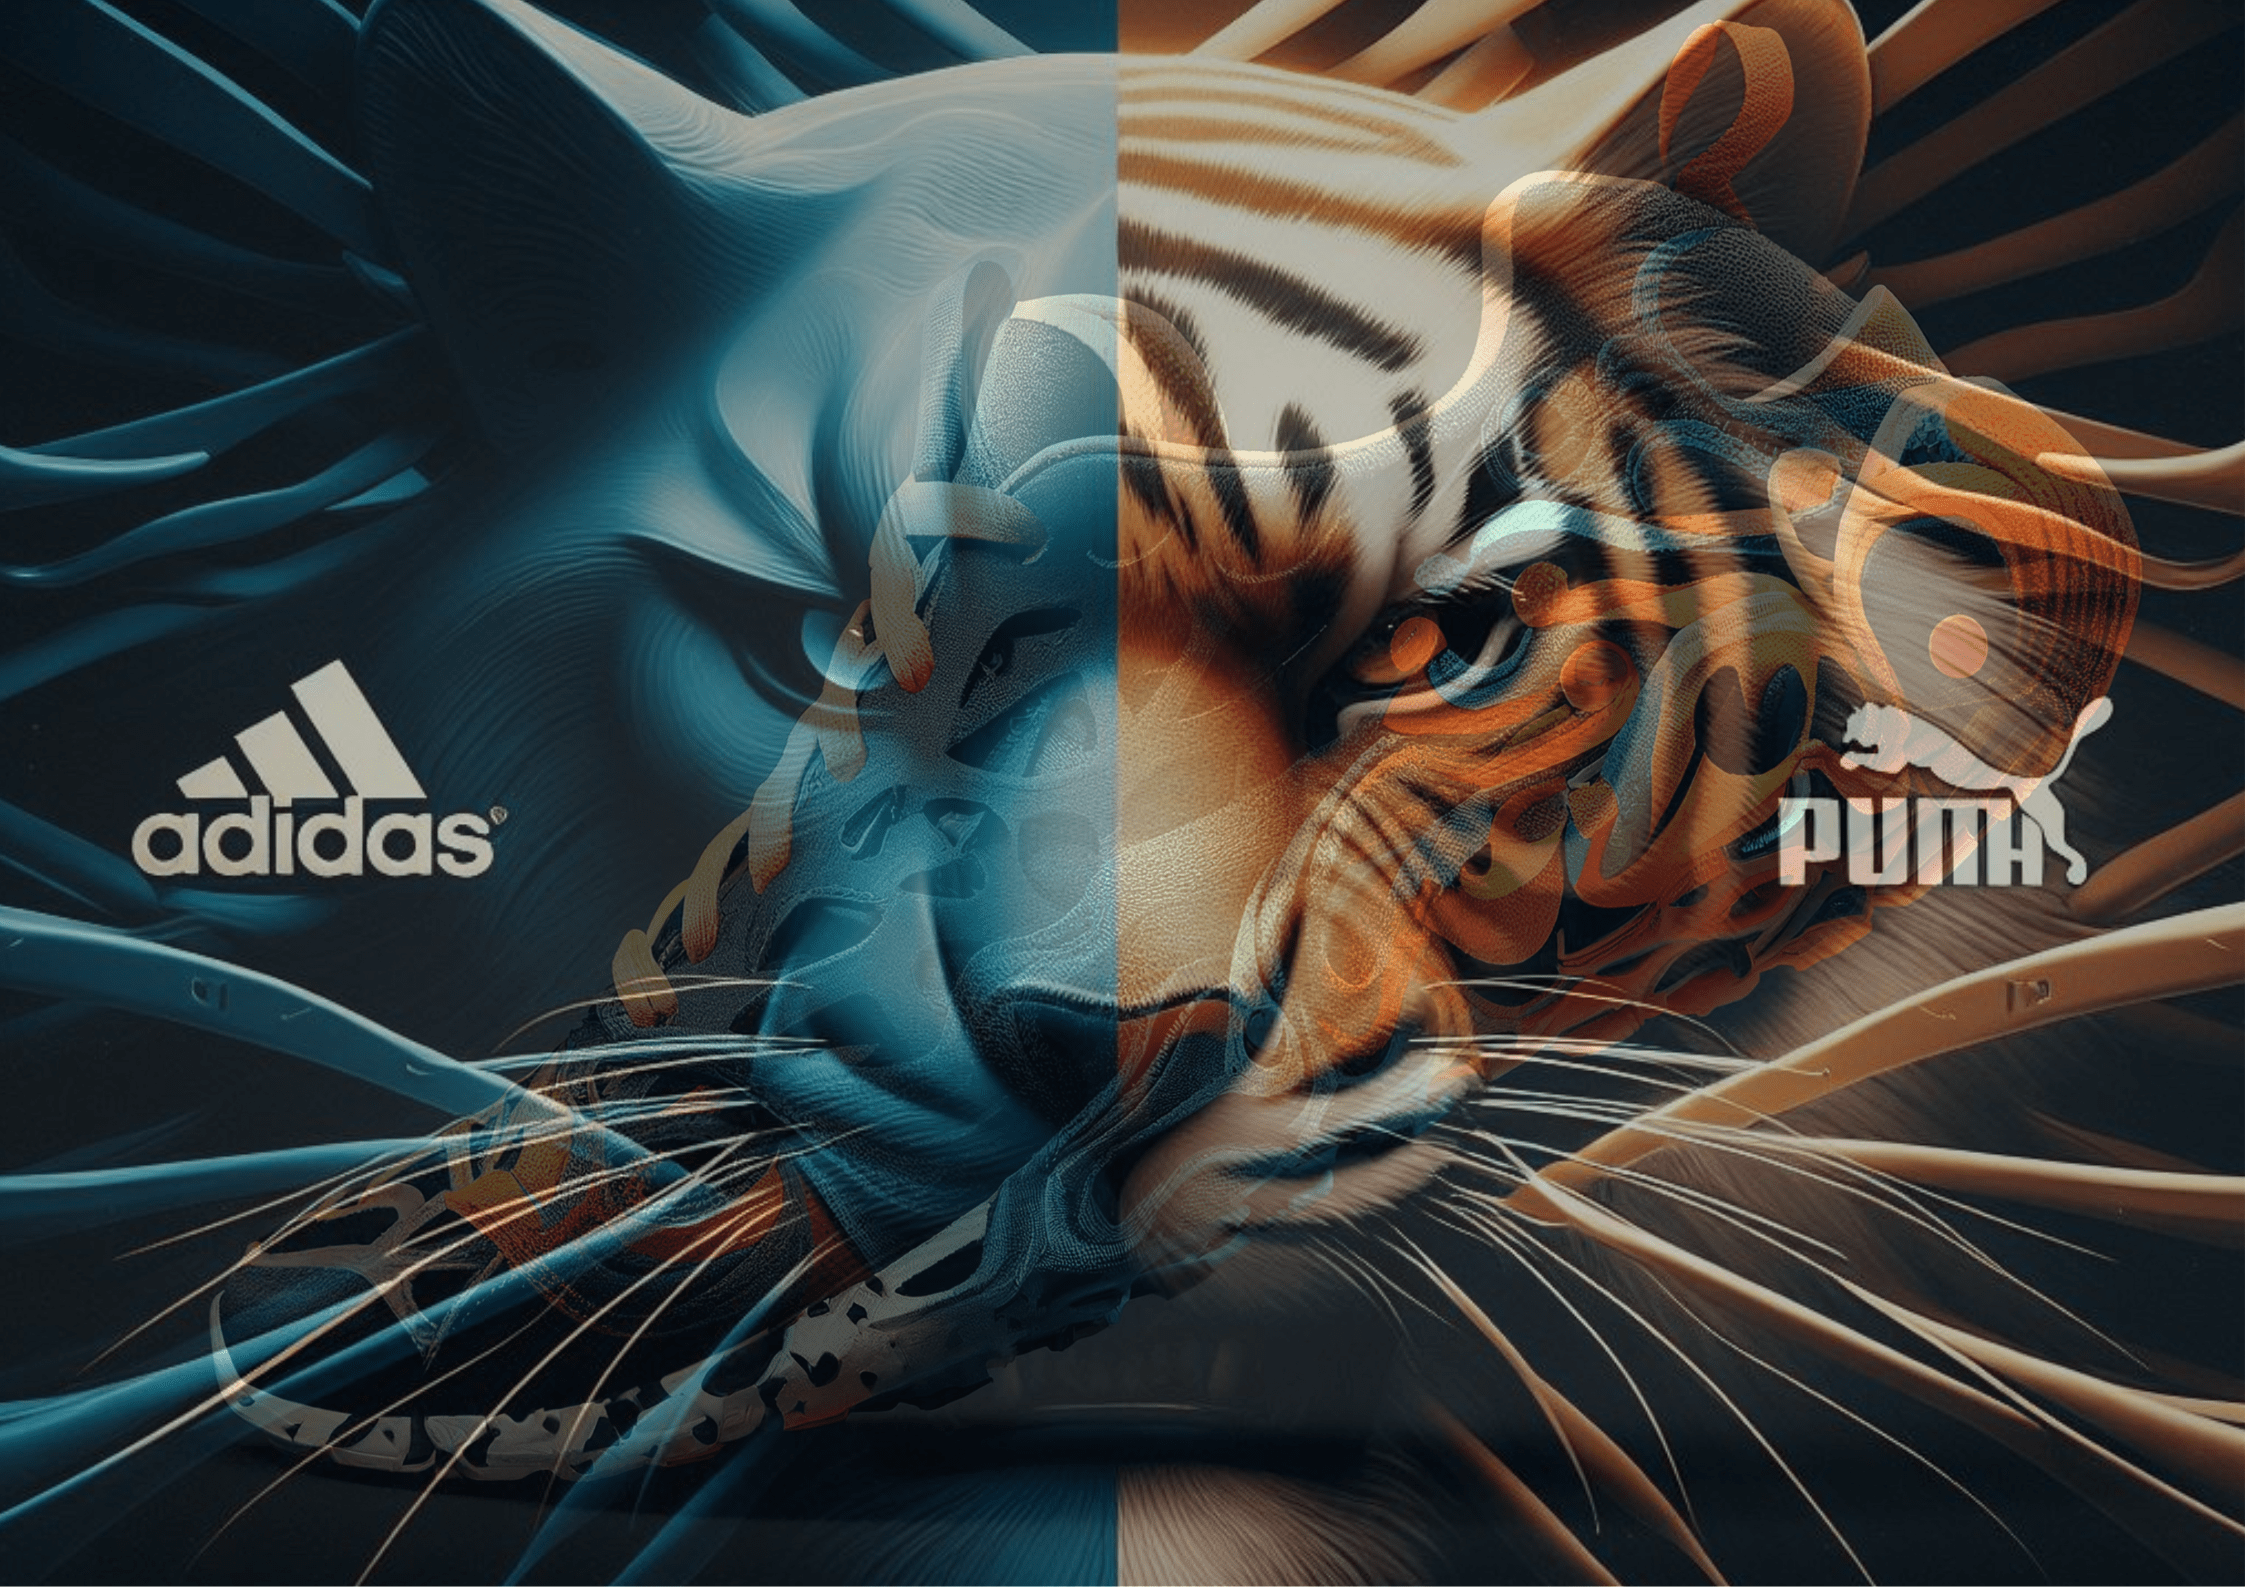 Puma vs Adidas